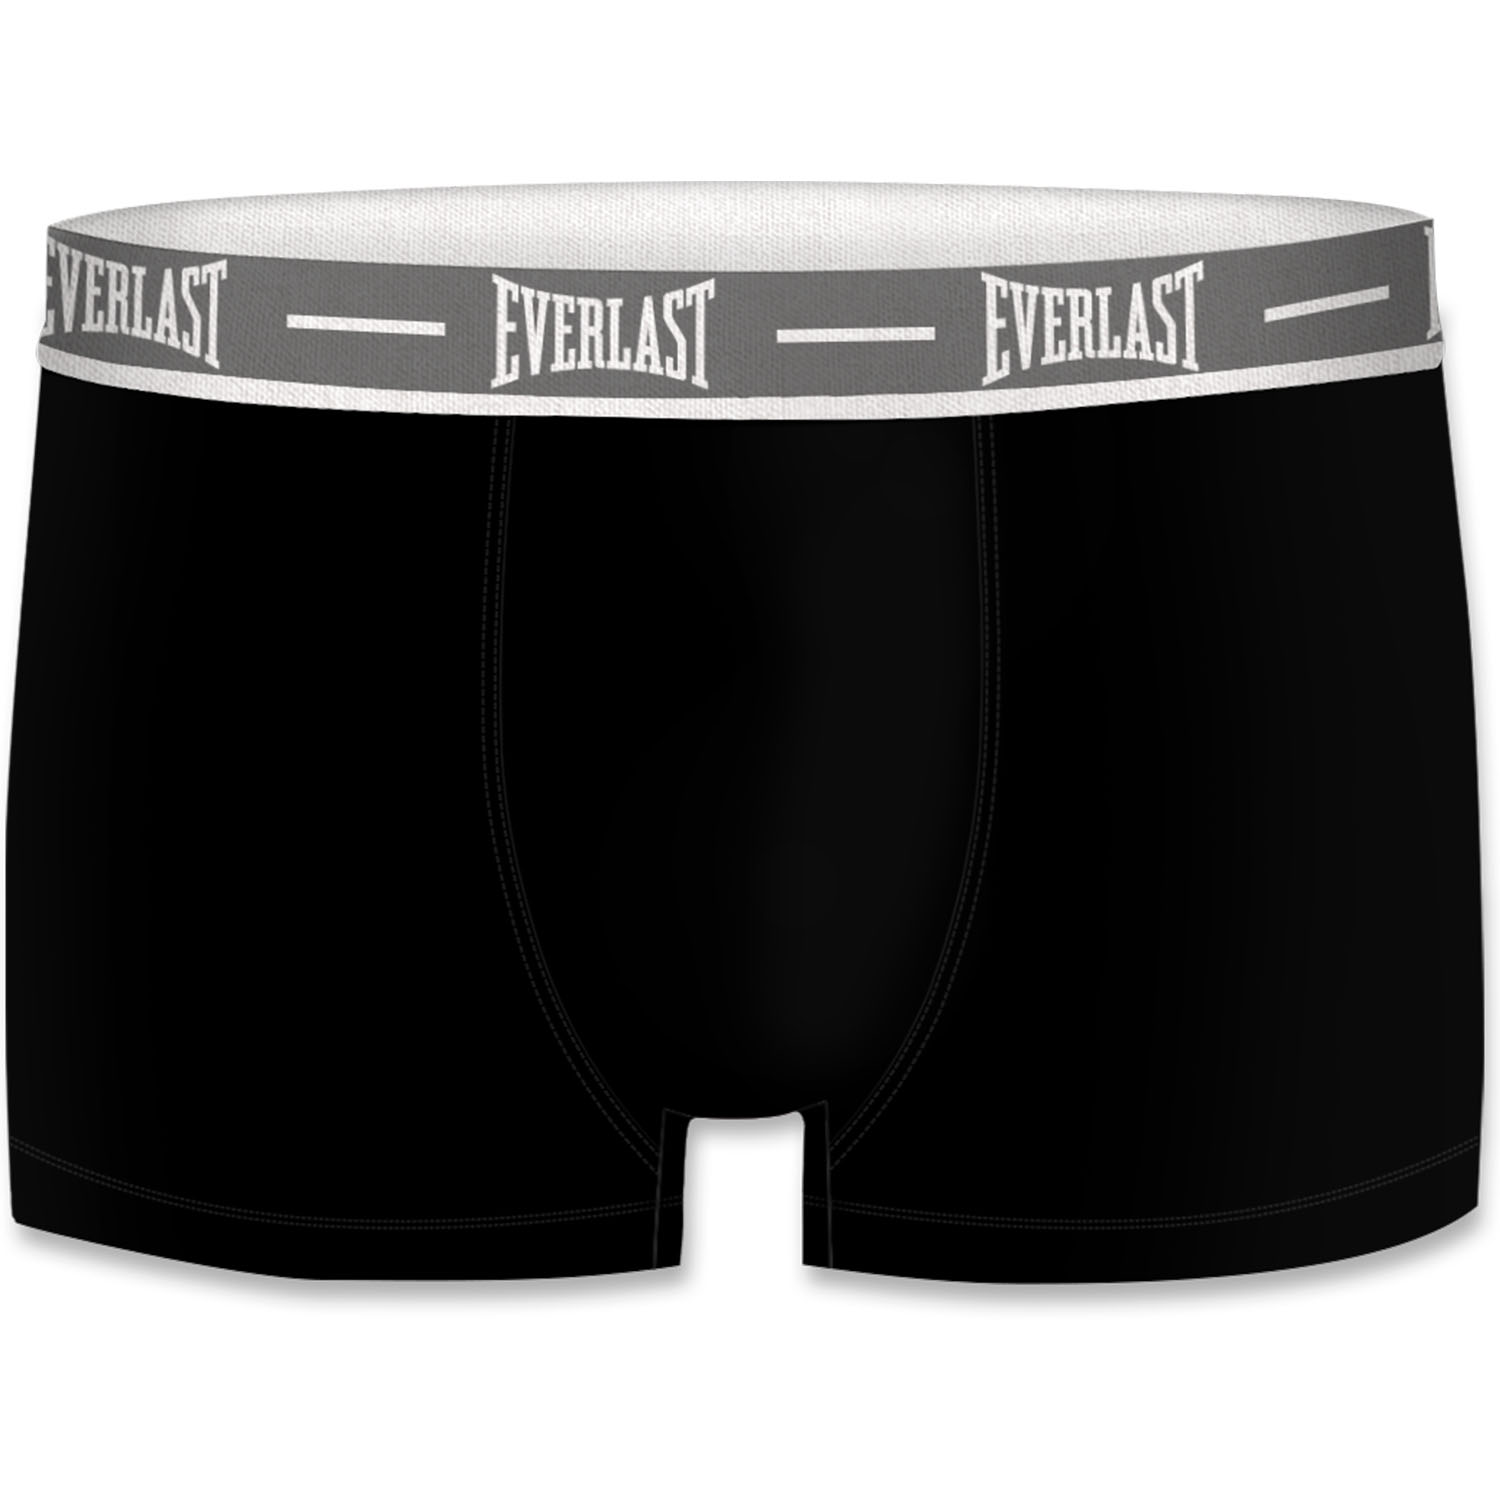 Everlast Boxershorts, AS2, black-grey, XXL